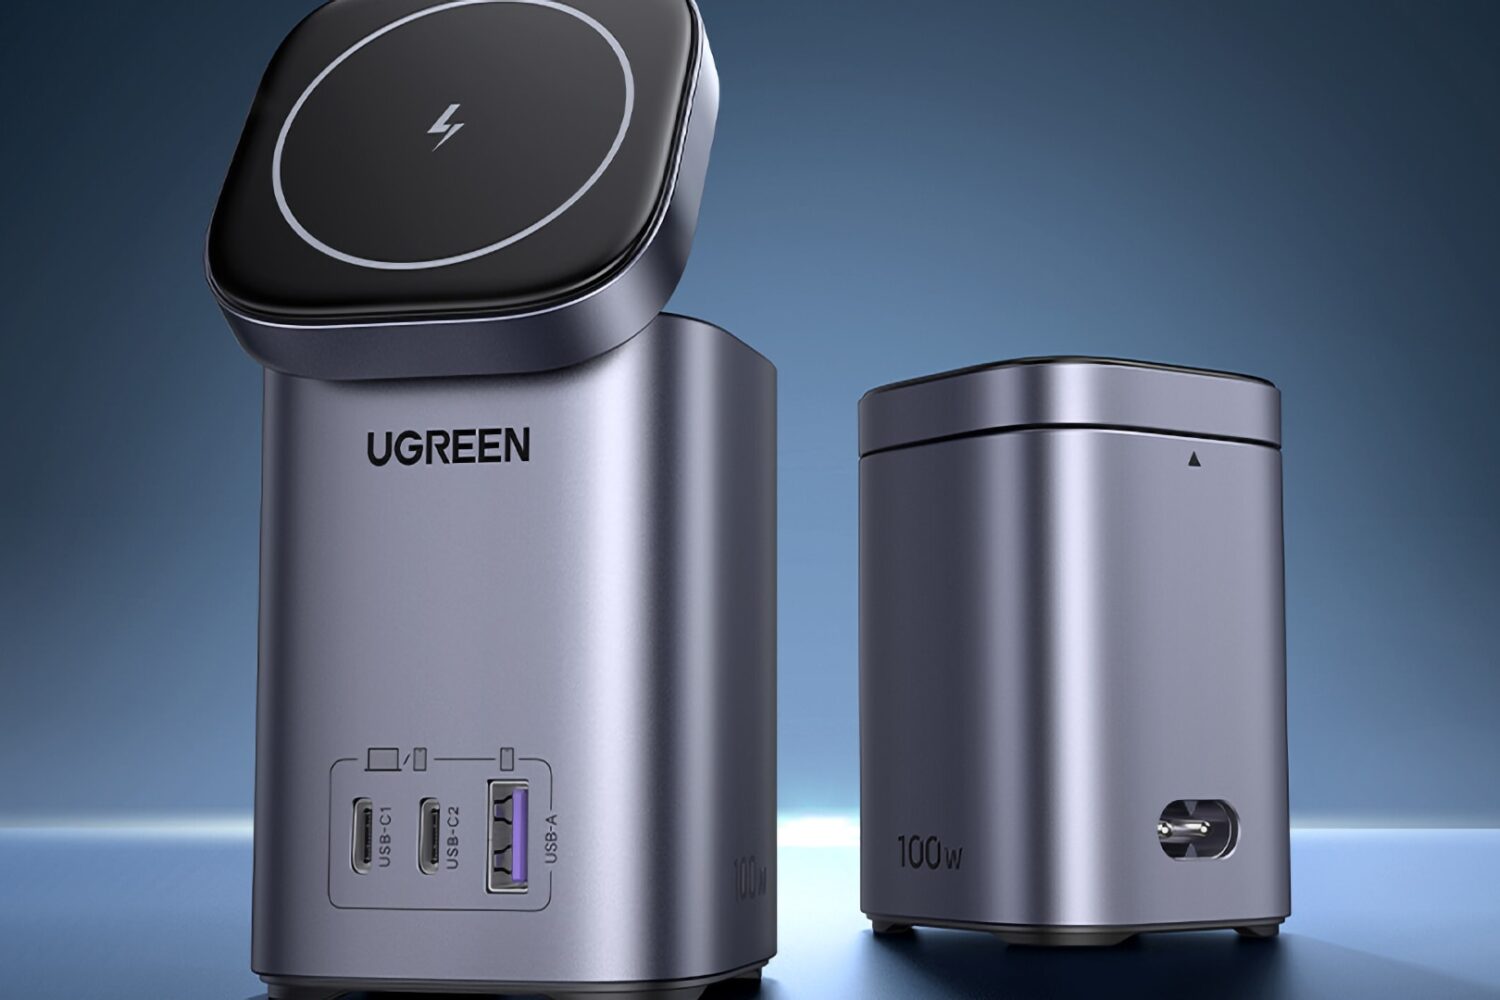 Marketing image showcasing Ugreen s 100W Nexode charging station